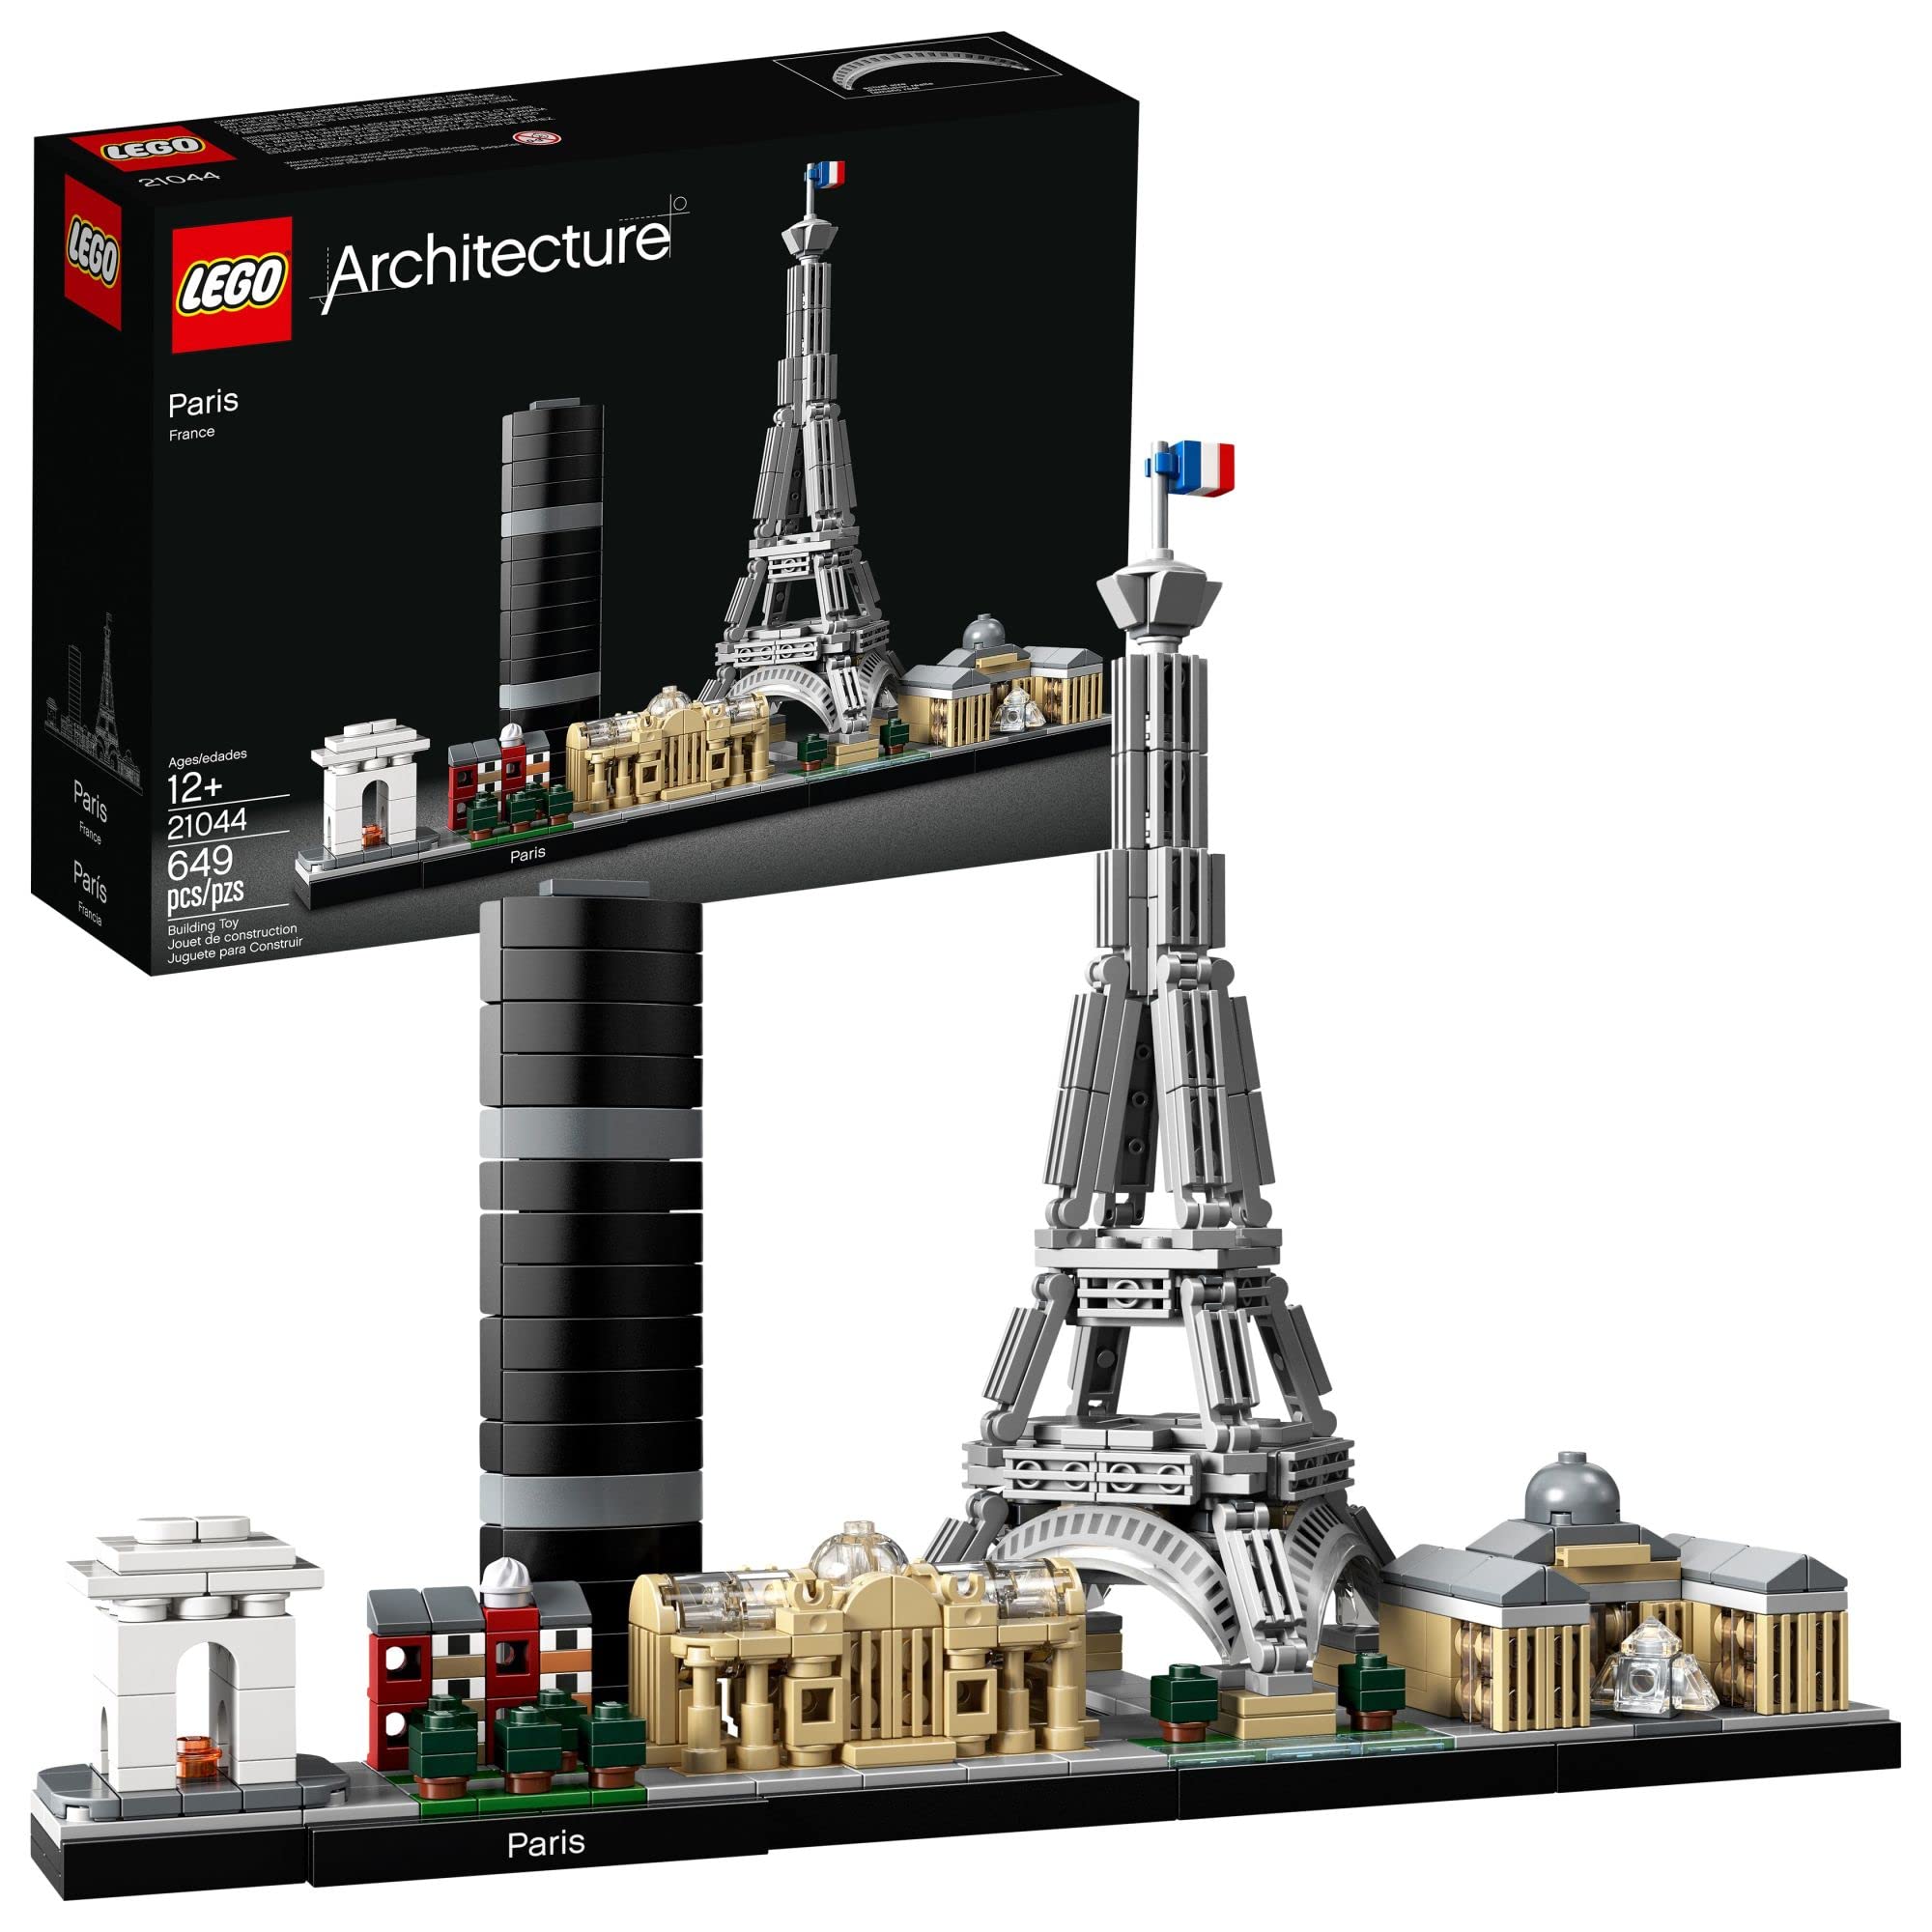 649-Piece LEGO Architecture Paris Skyline Building Kit (21044) - $39.99 + F/S - Amazon